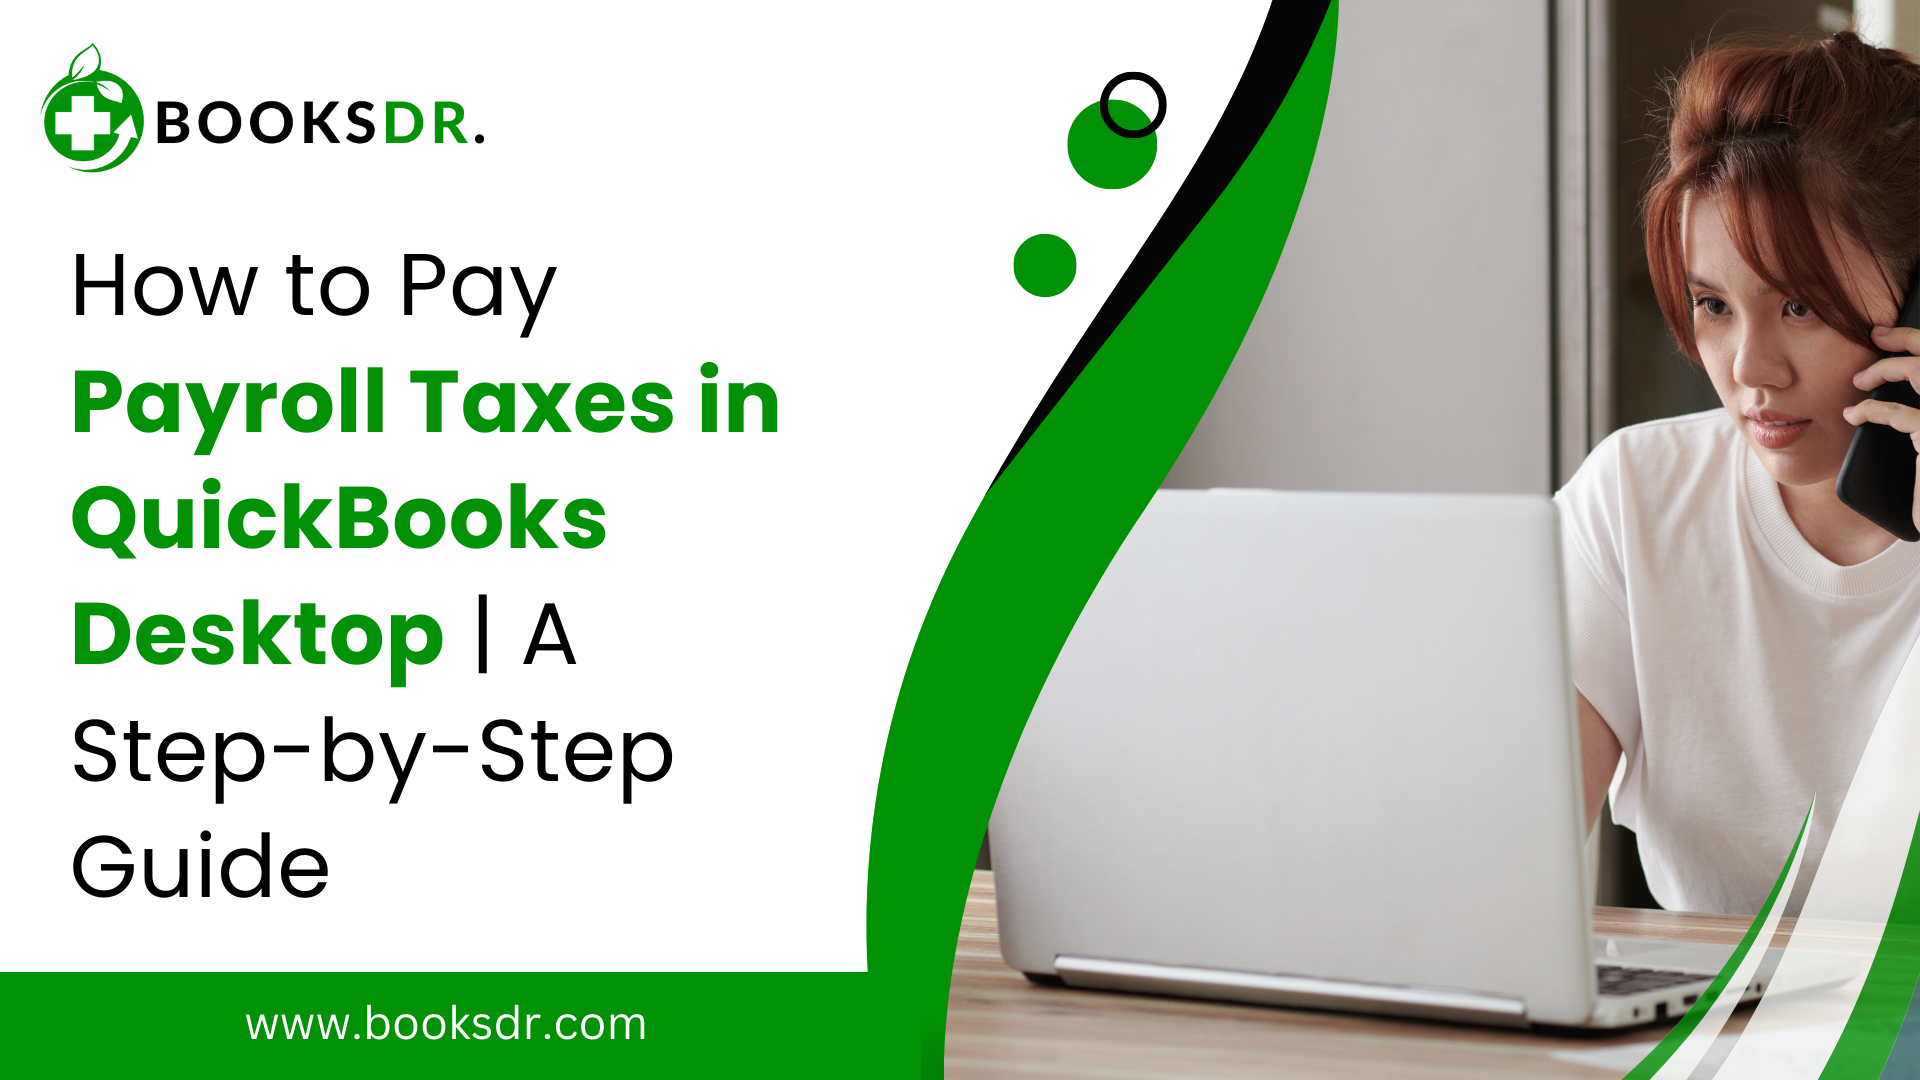 Quickbooks desktop payroll Taxes